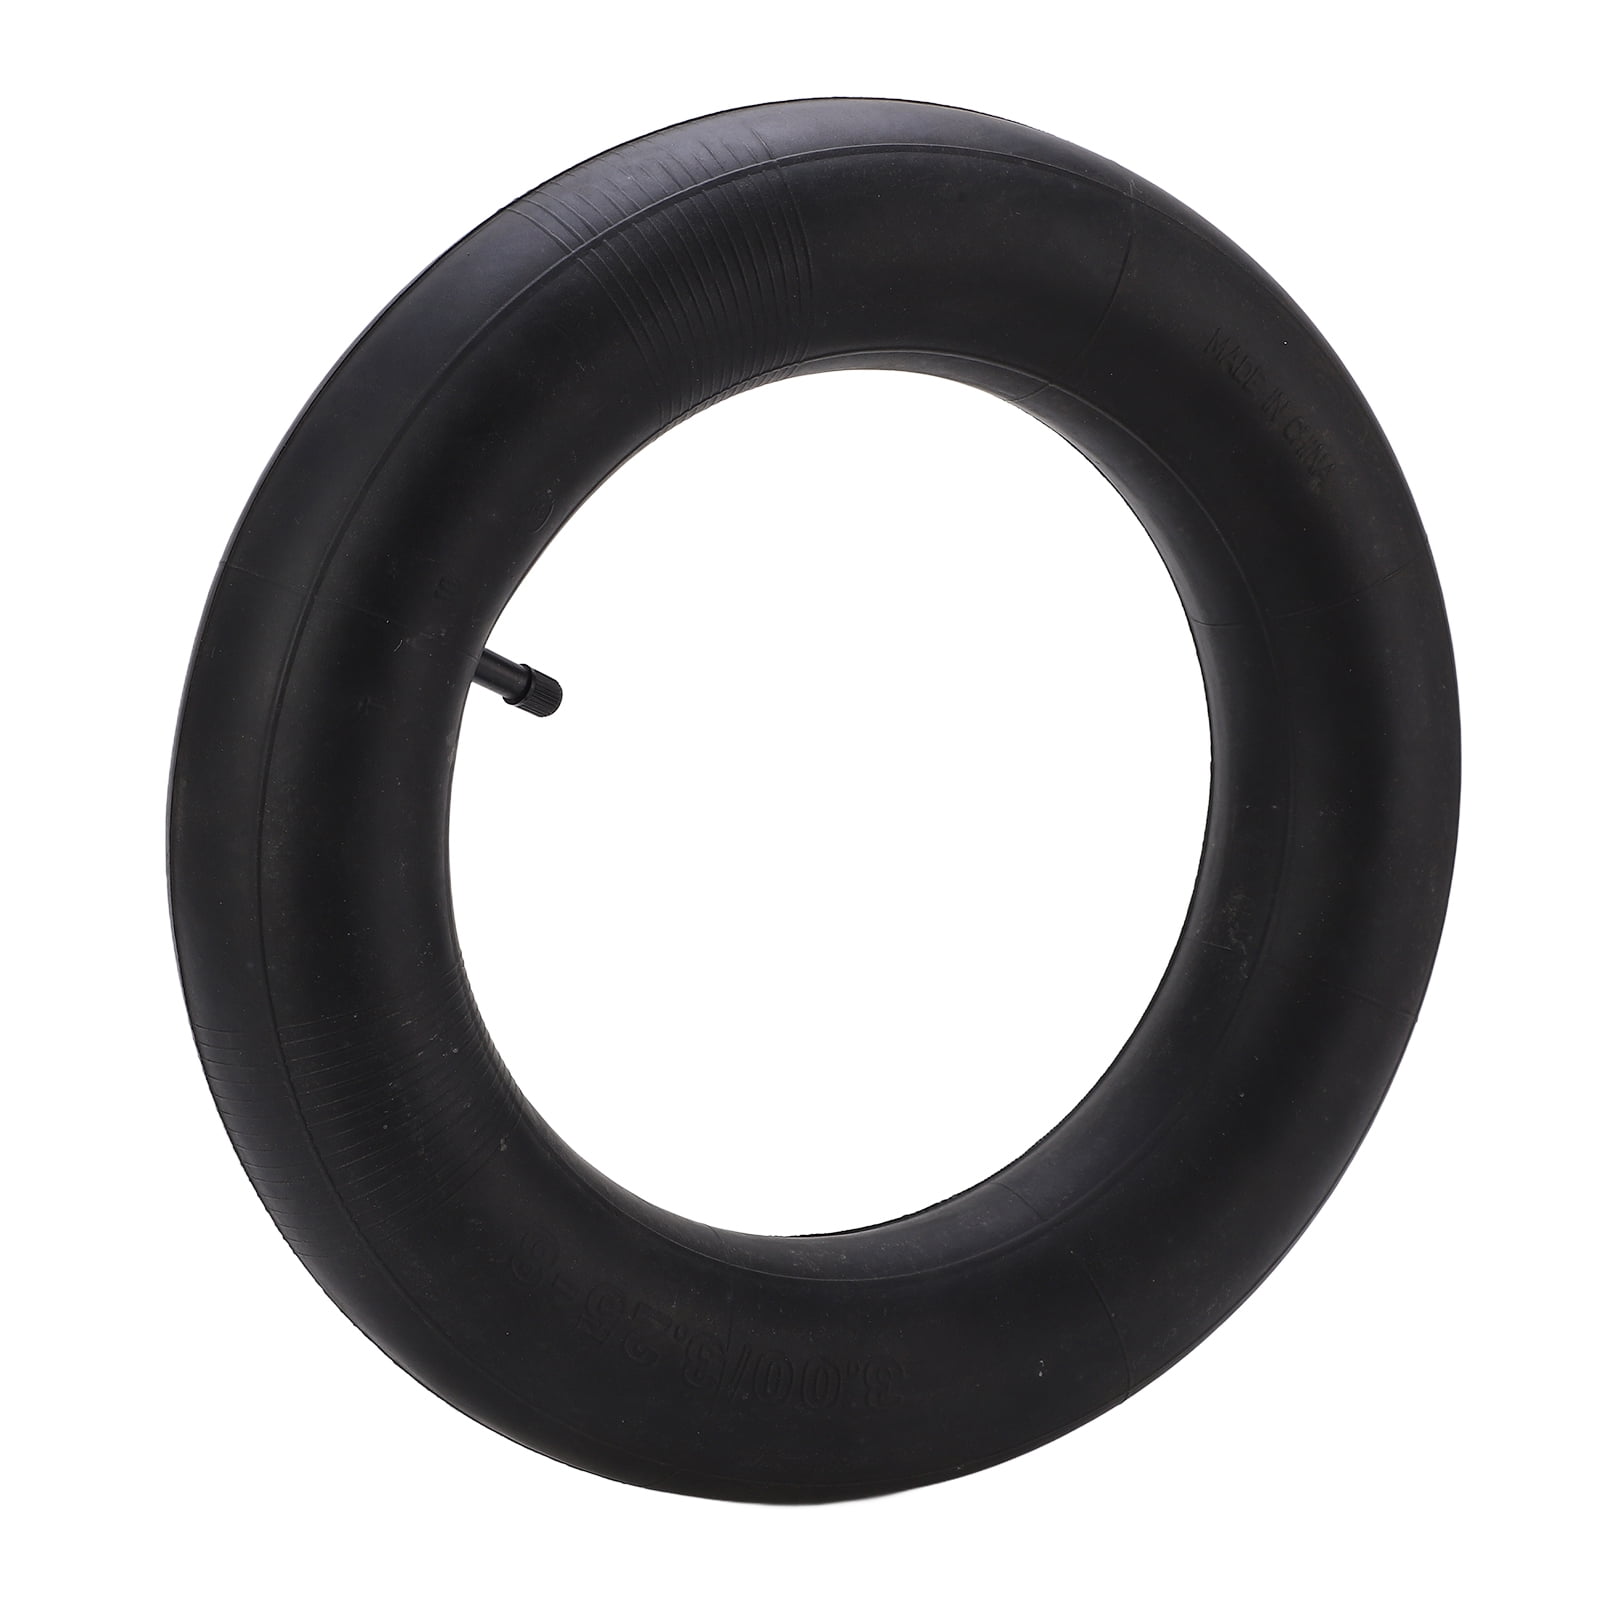 2 x Wheelbarrow Wheel Rubber Inner Tube and Barrow Trolley Tyre 3.50-8 To 35 PSi 